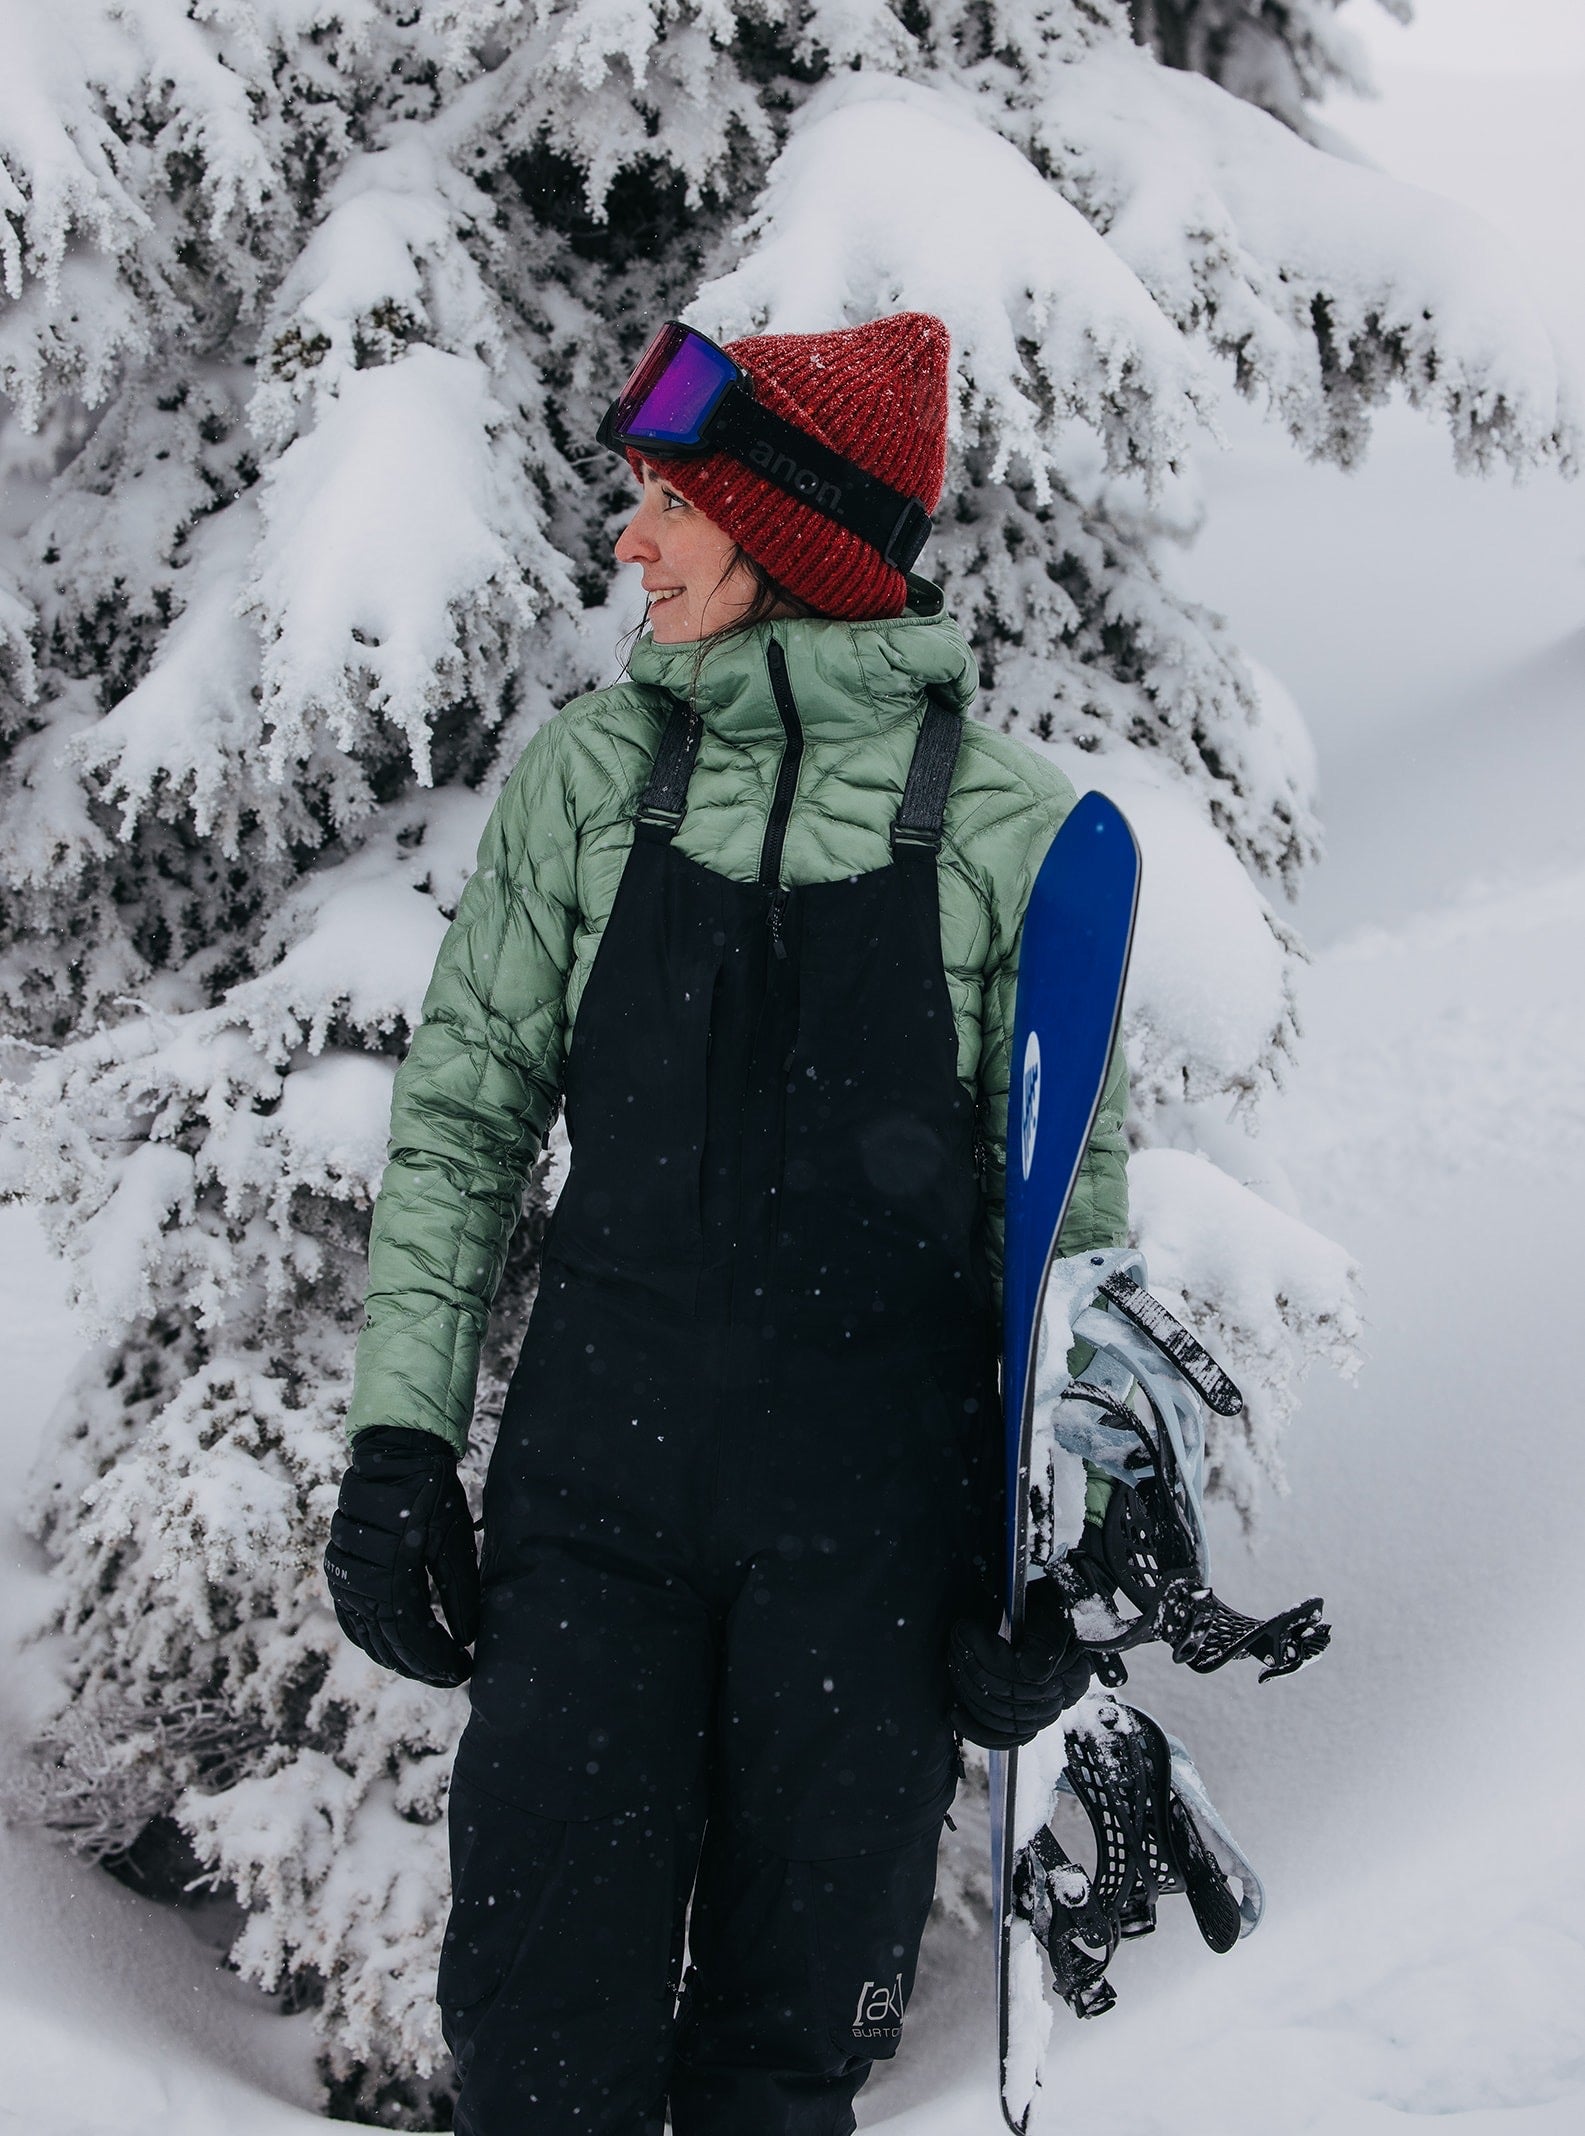 Jtckarpu Classic Ski Pants for Women, Winter Windproof Waterproof Insulated Snow  Pant Warm Soft Thick Fleece Lined Hiking Pant 